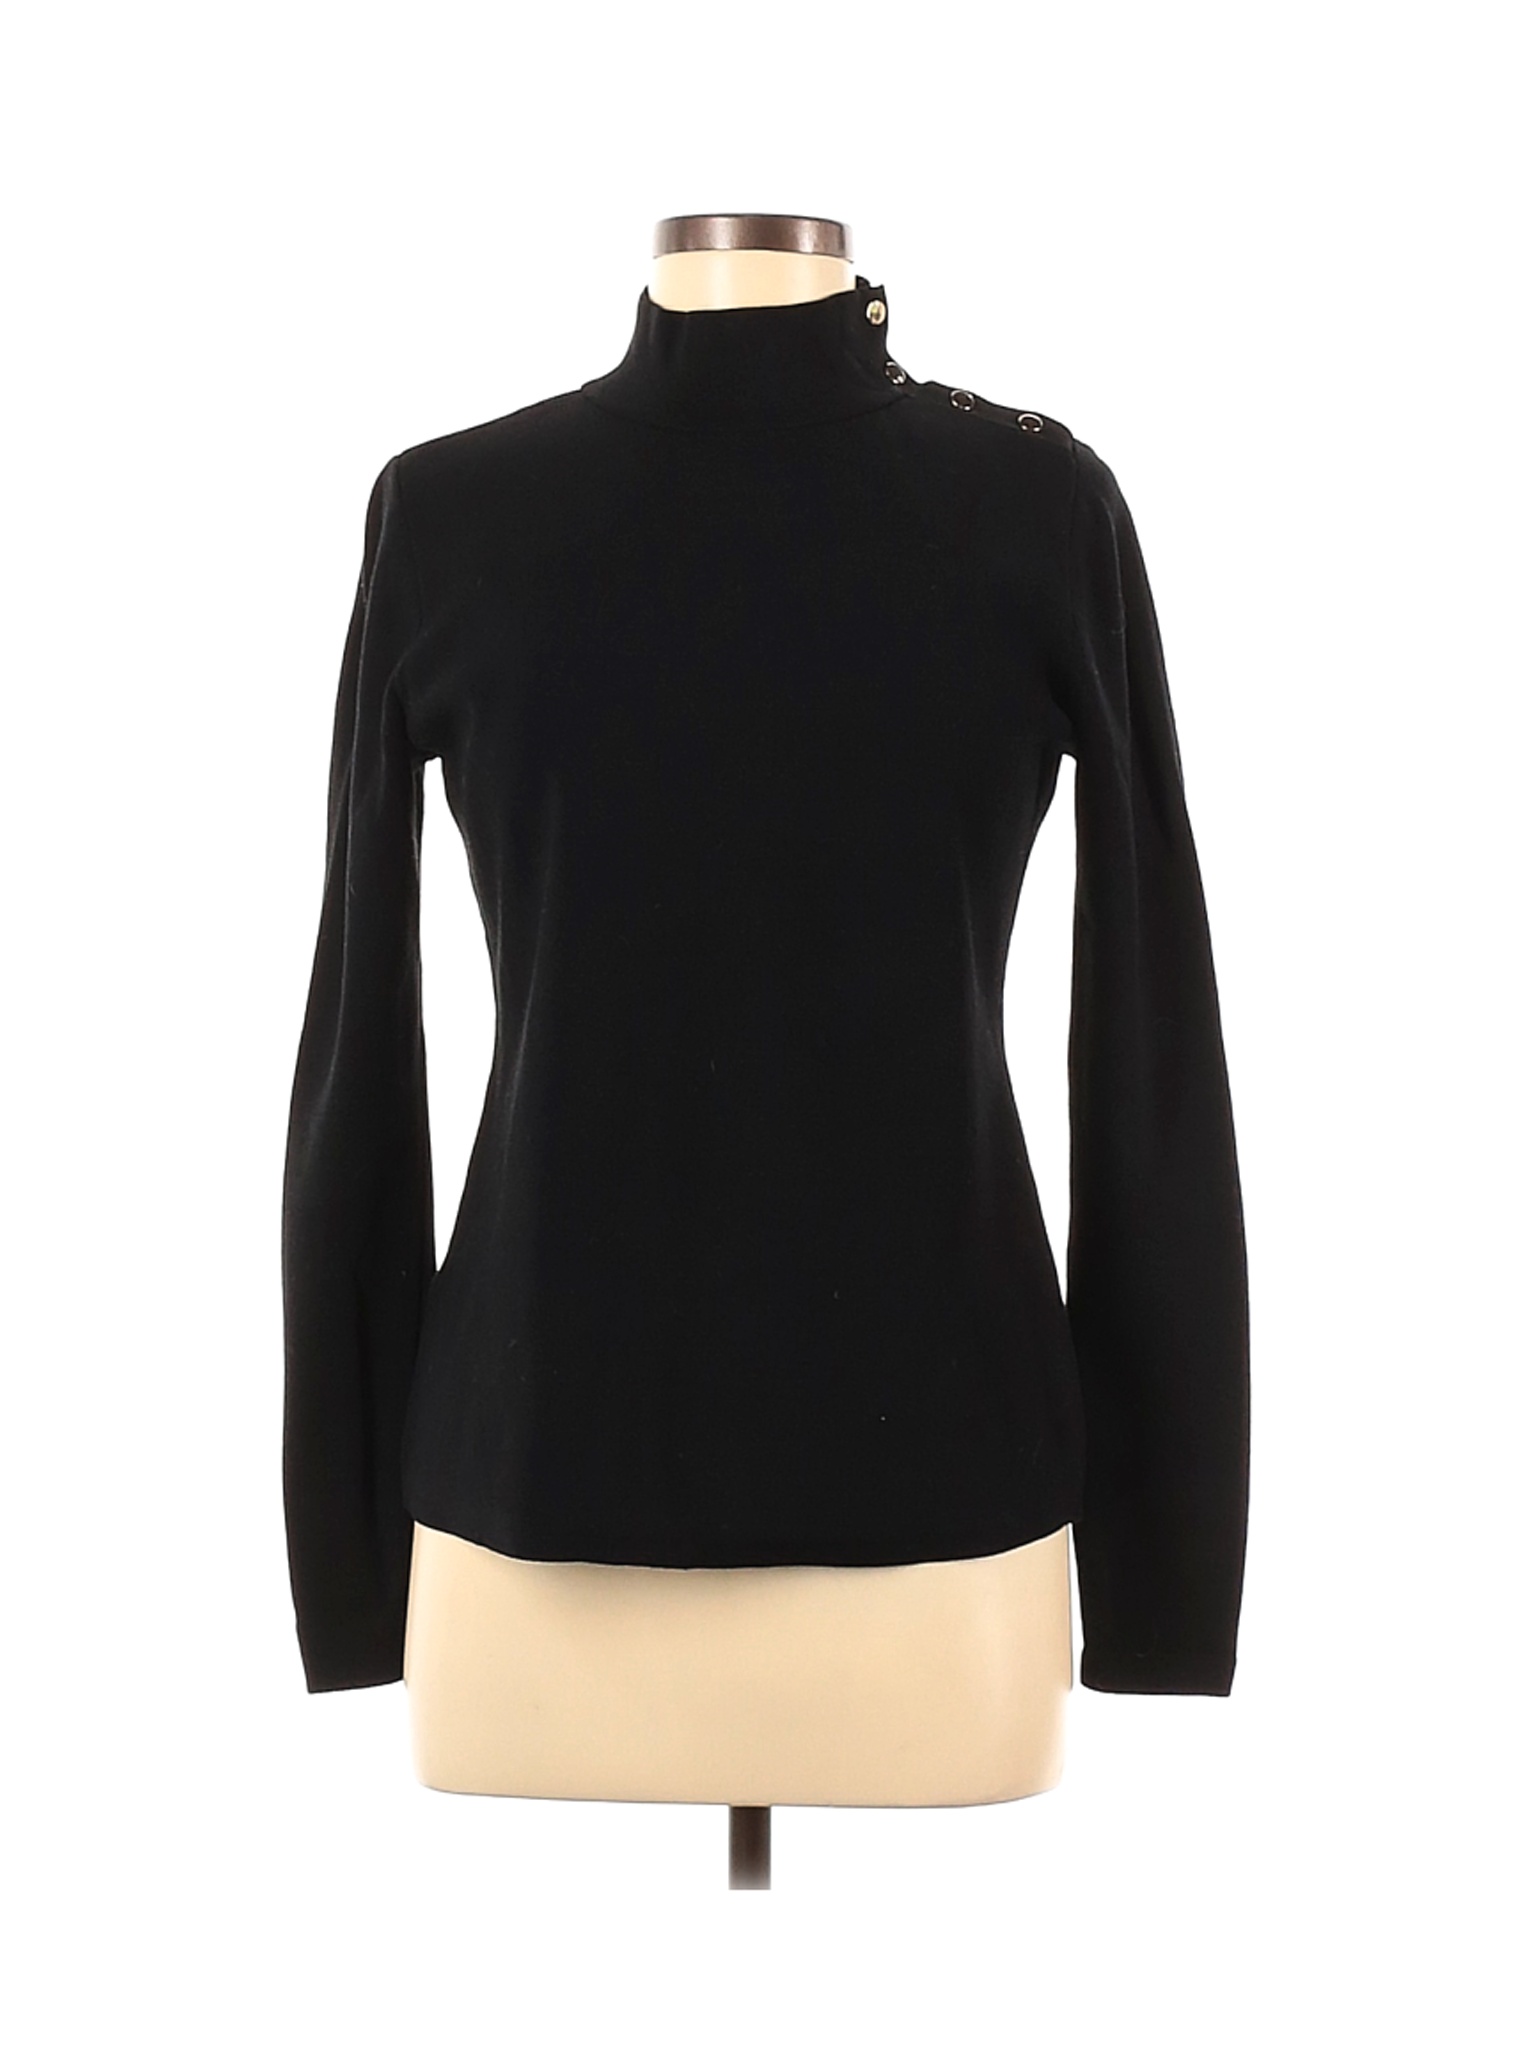 Ann Taylor Women Black Turtleneck Sweater M | eBay